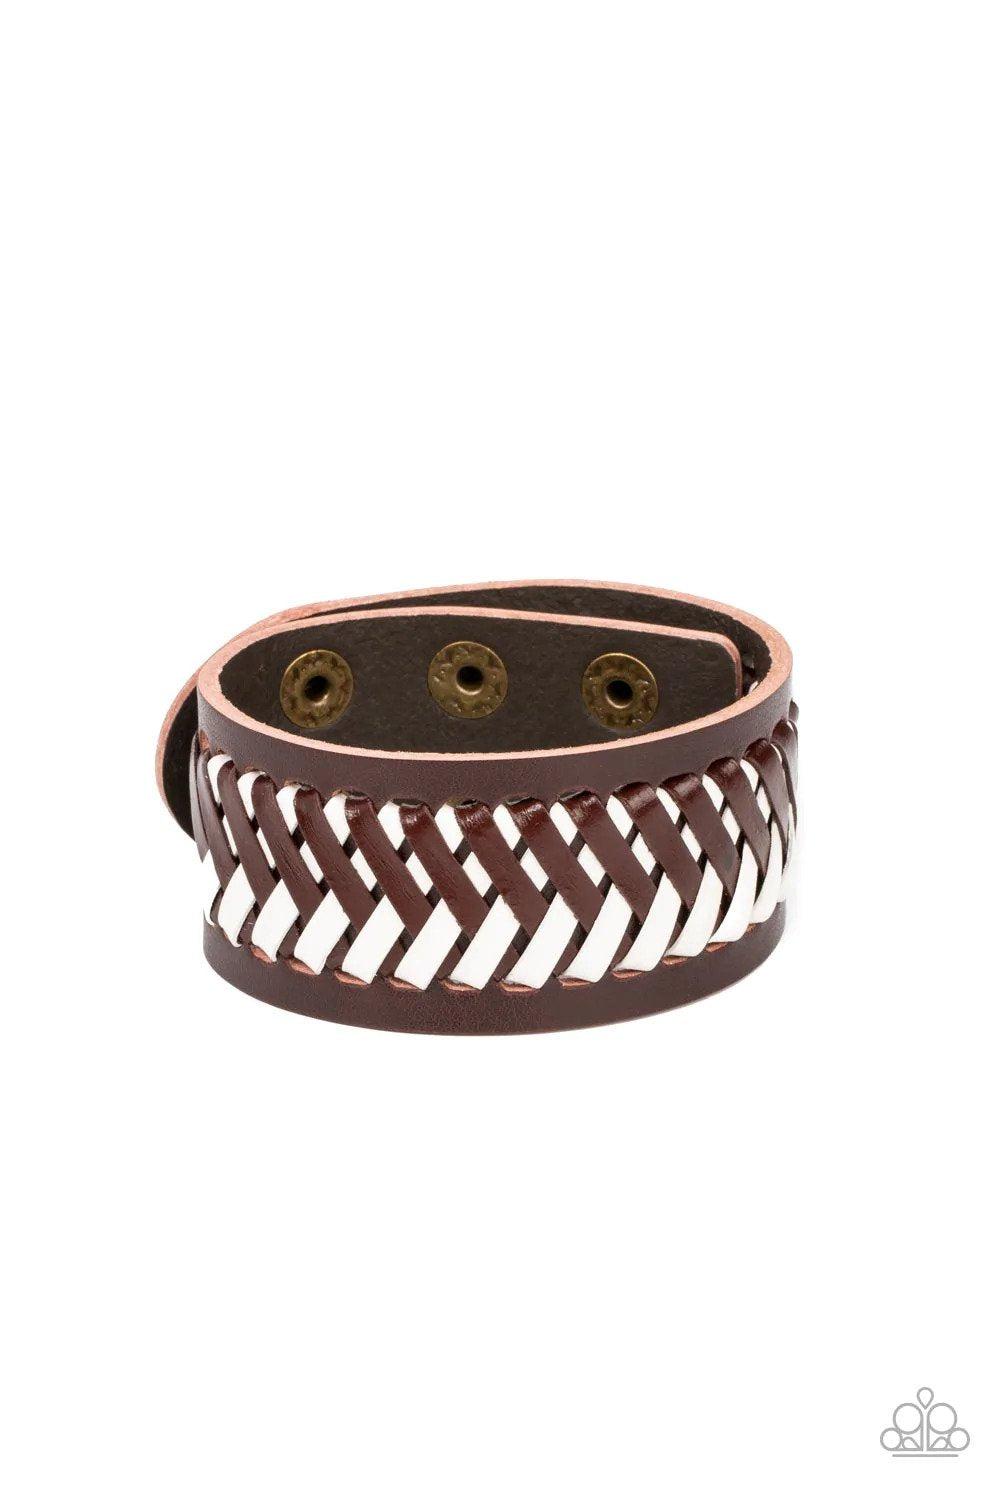 Punk Rocker Road Brown Bracelet - Paparazzi Accessories- lightbox - CarasShop.com - $5 Jewelry by Cara Jewels